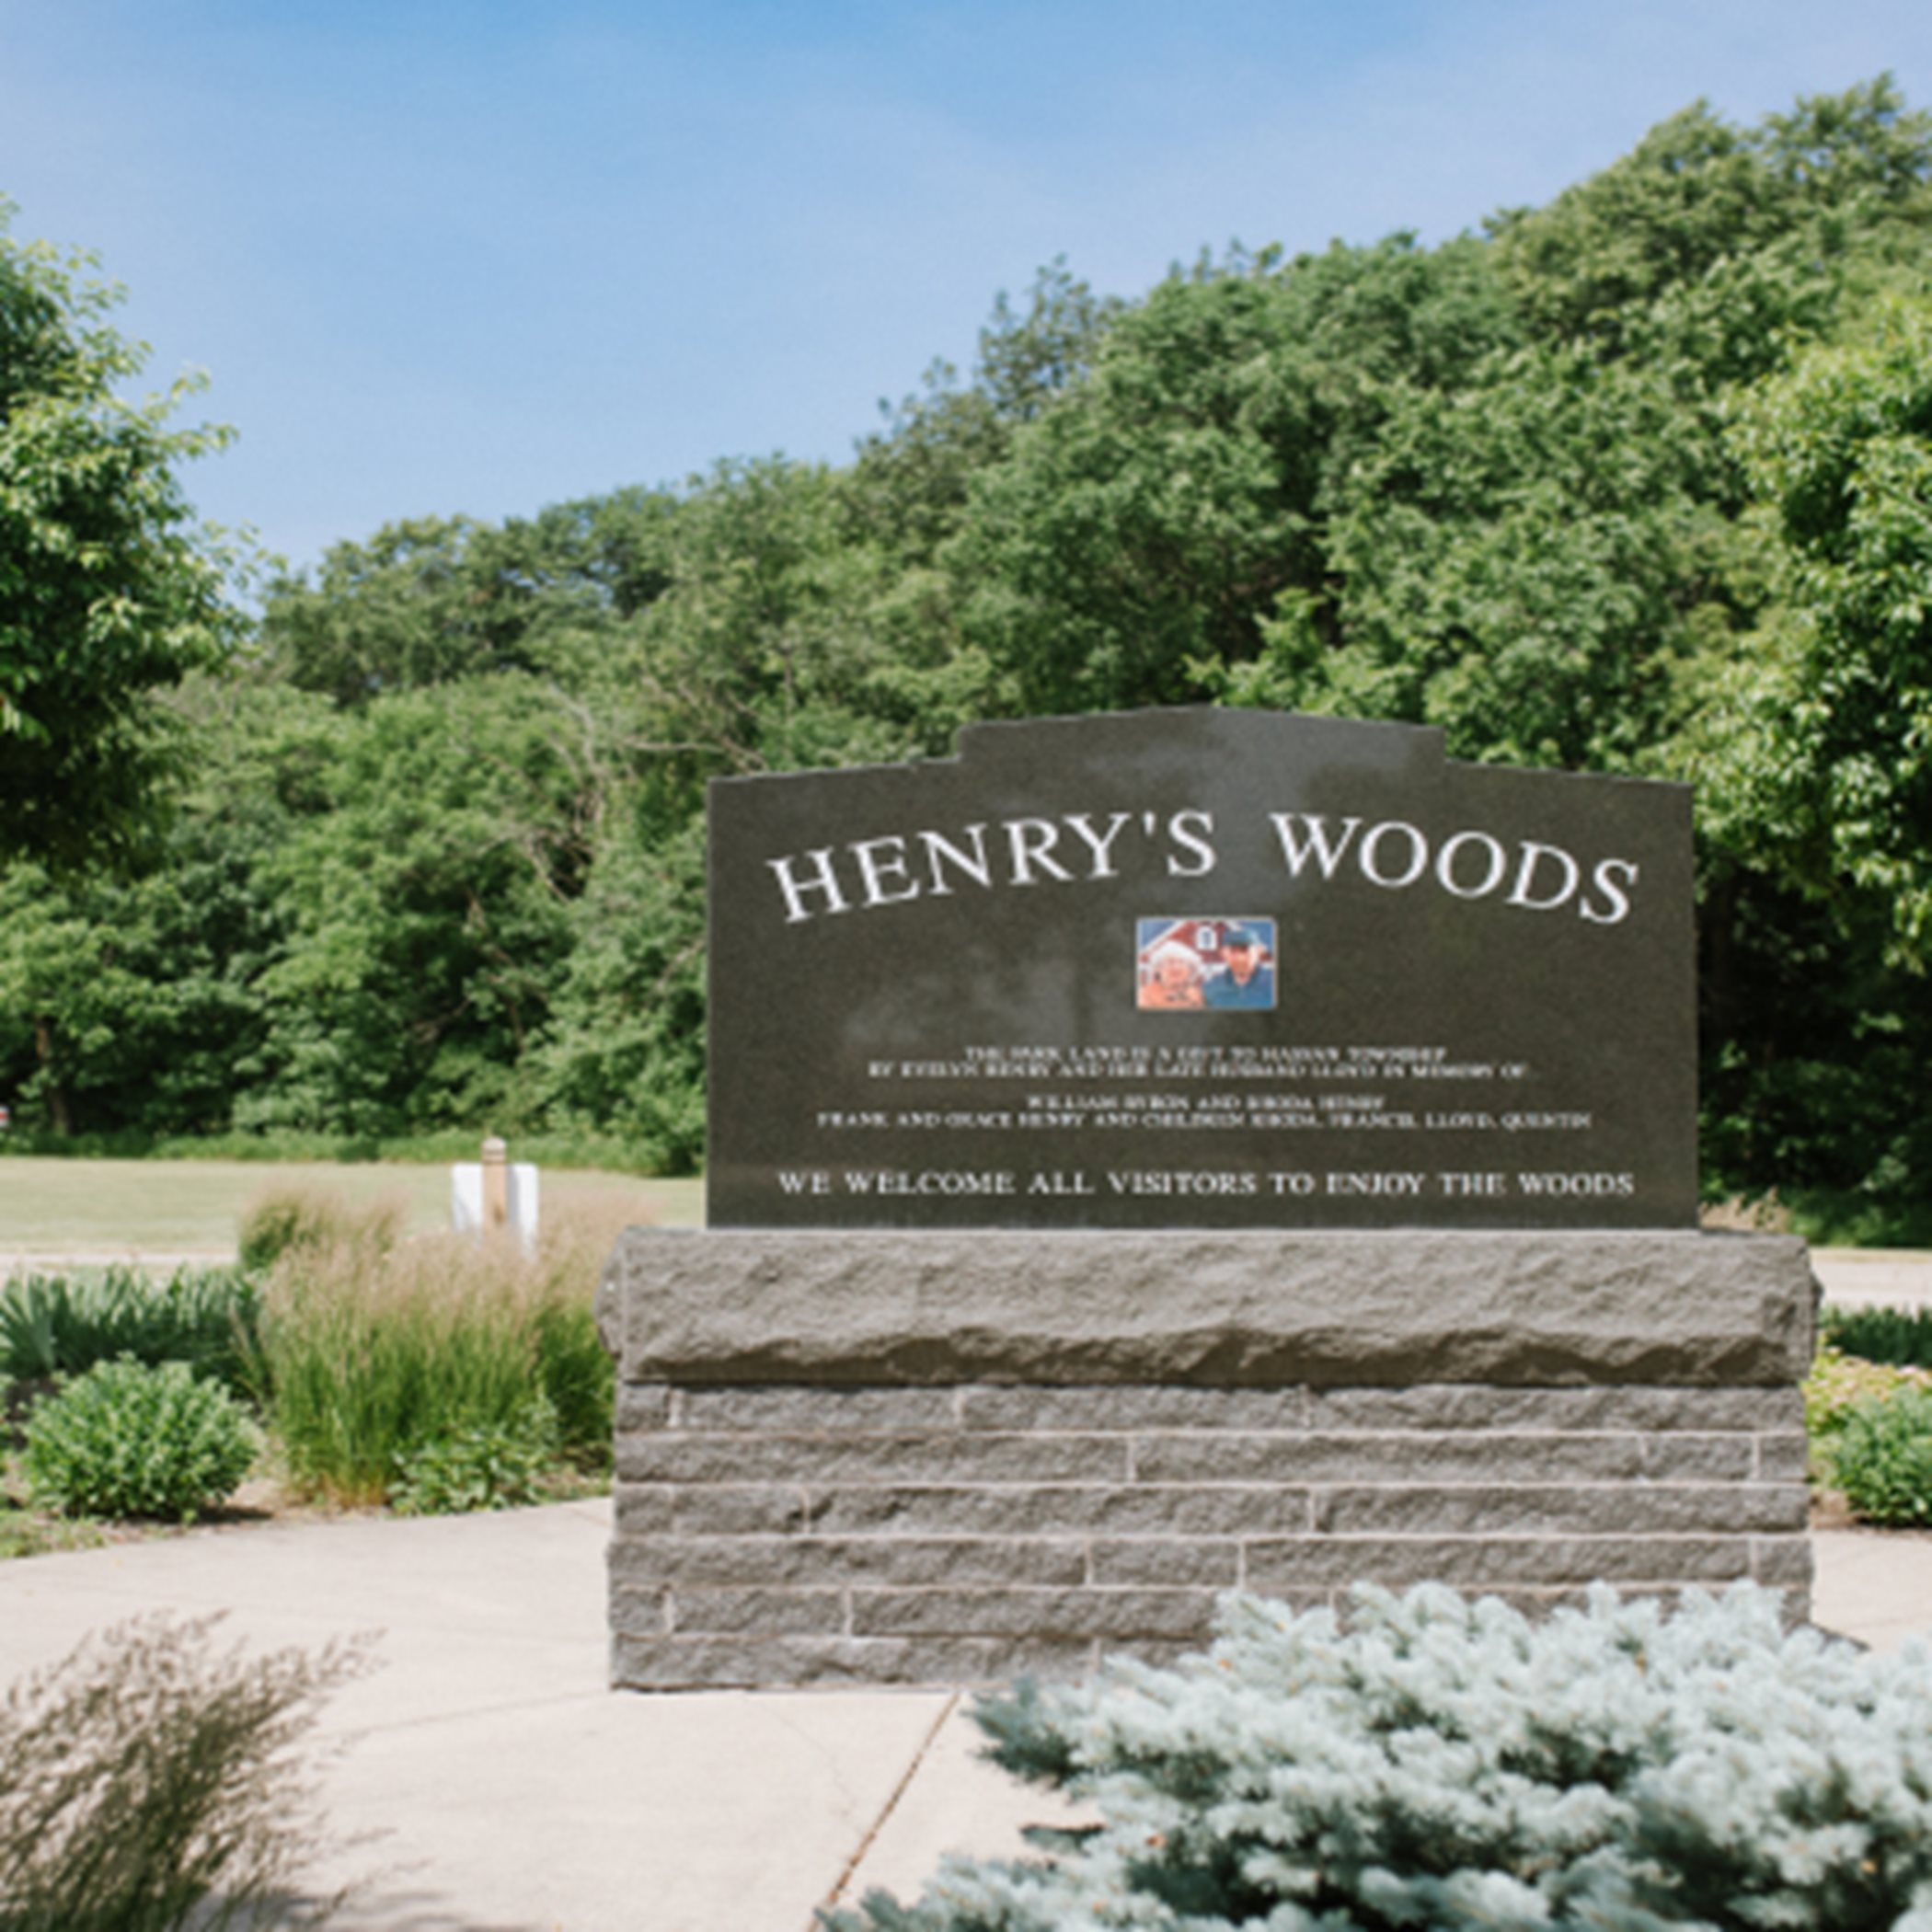 Henry's Woods Park